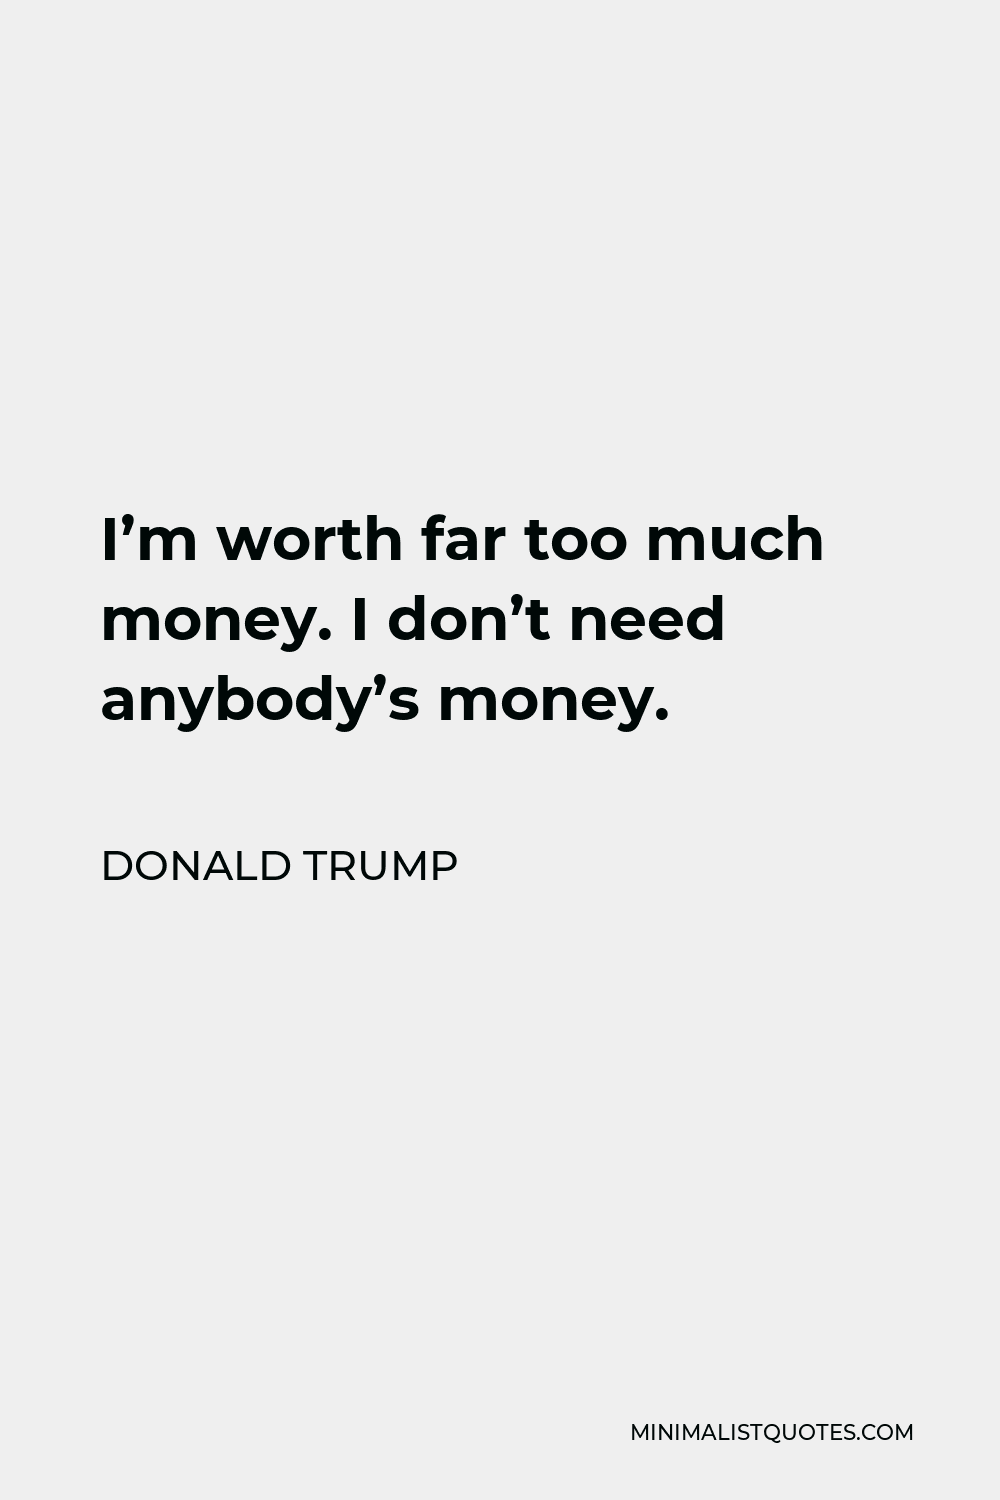 Donald Trump Quote - I’m worth far too much money. I don’t need anybody’s money.